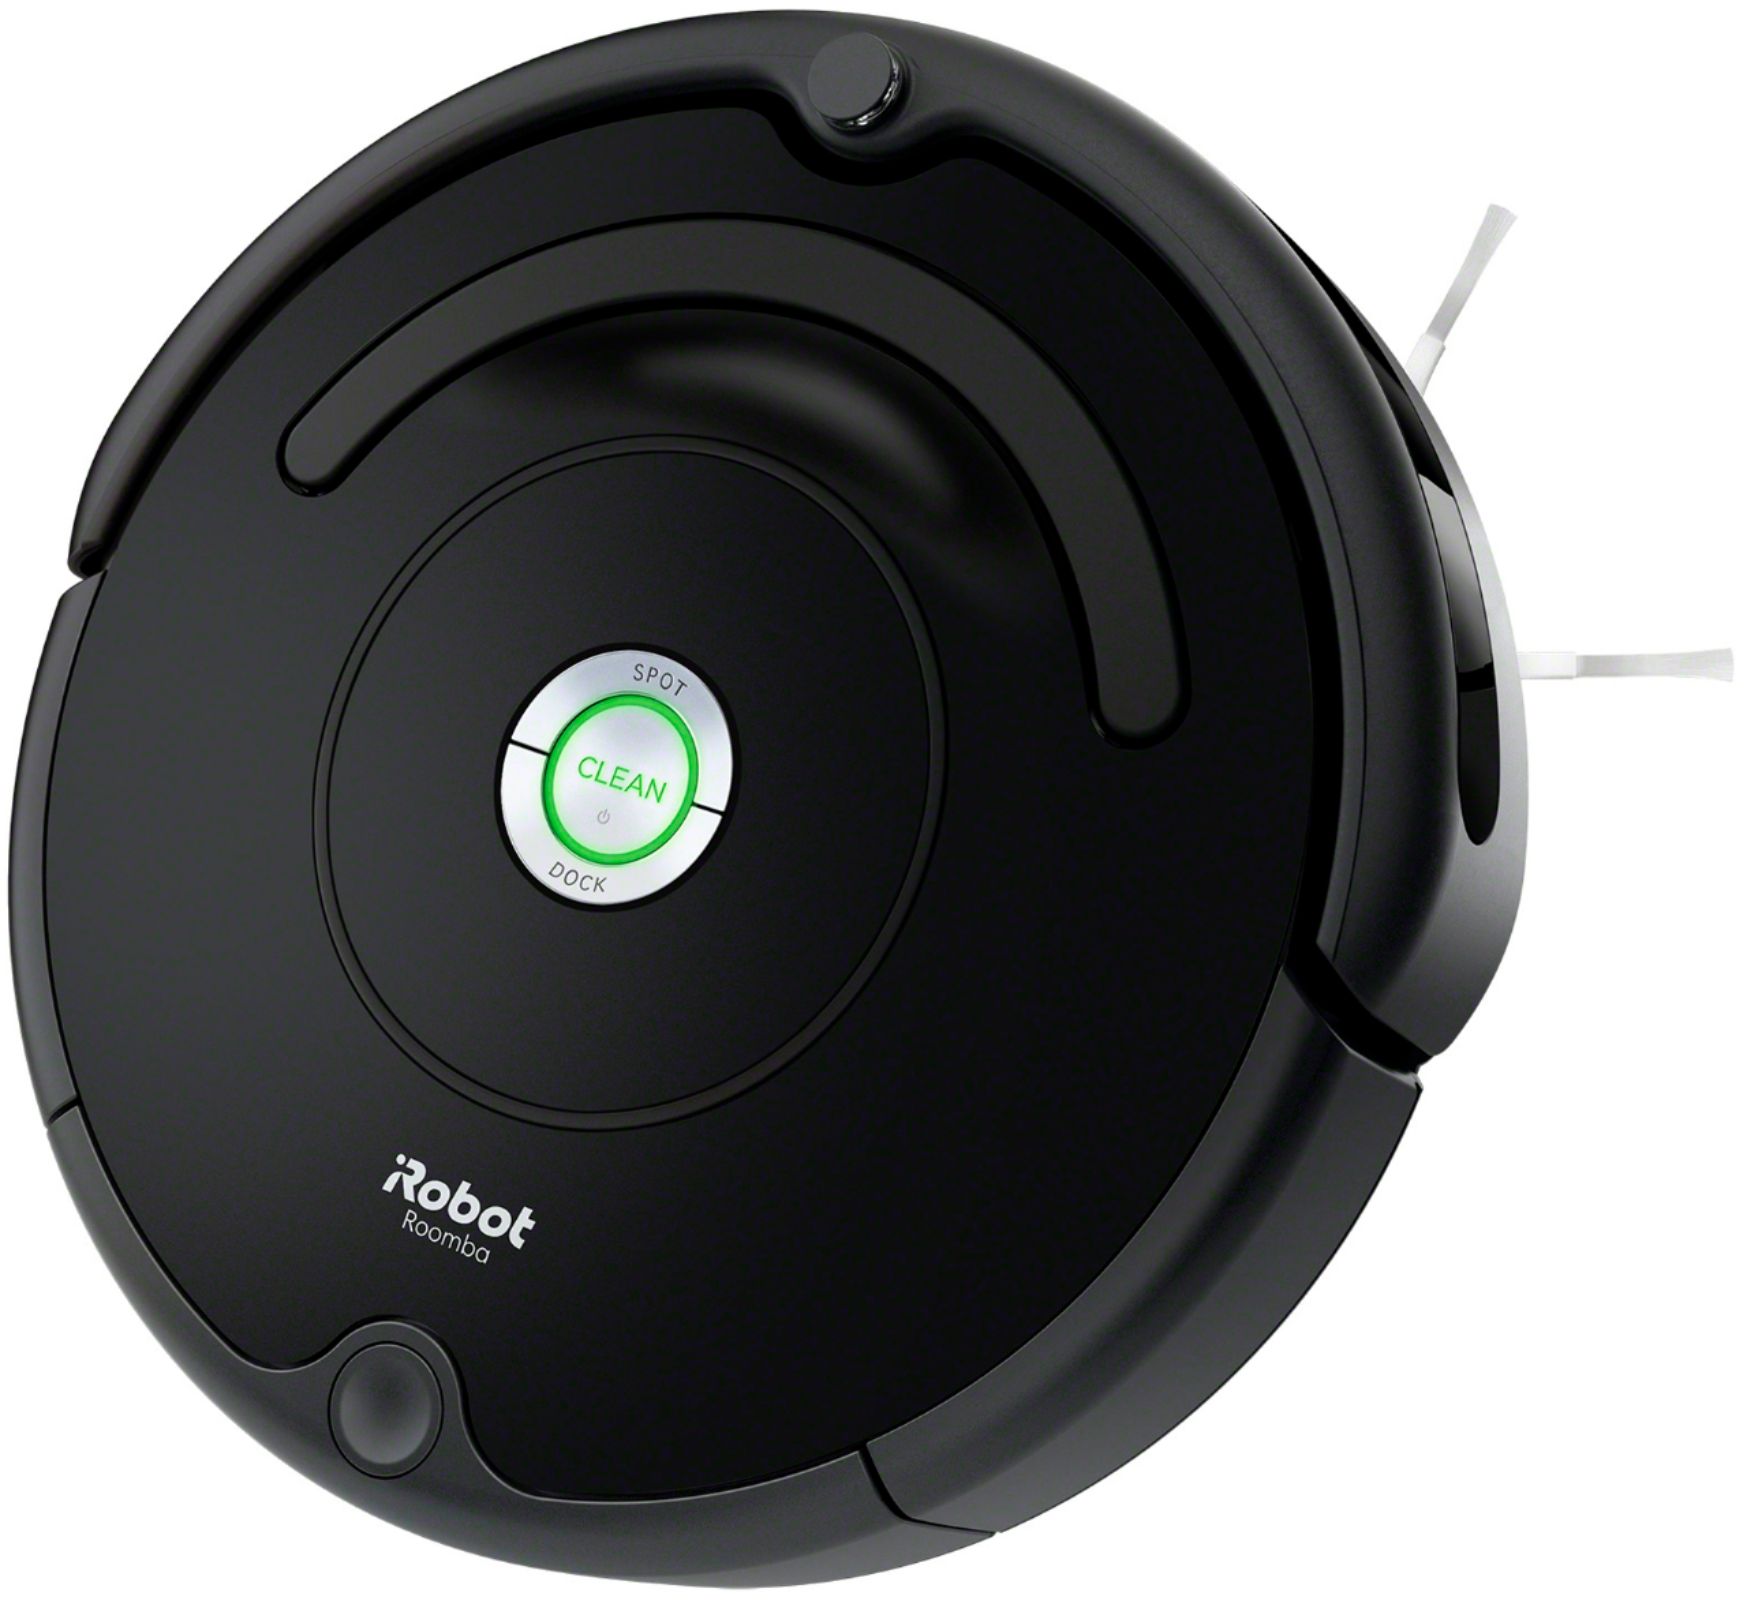 Angle View: iRobot - Roomba 614 Robot Vacuum - Black